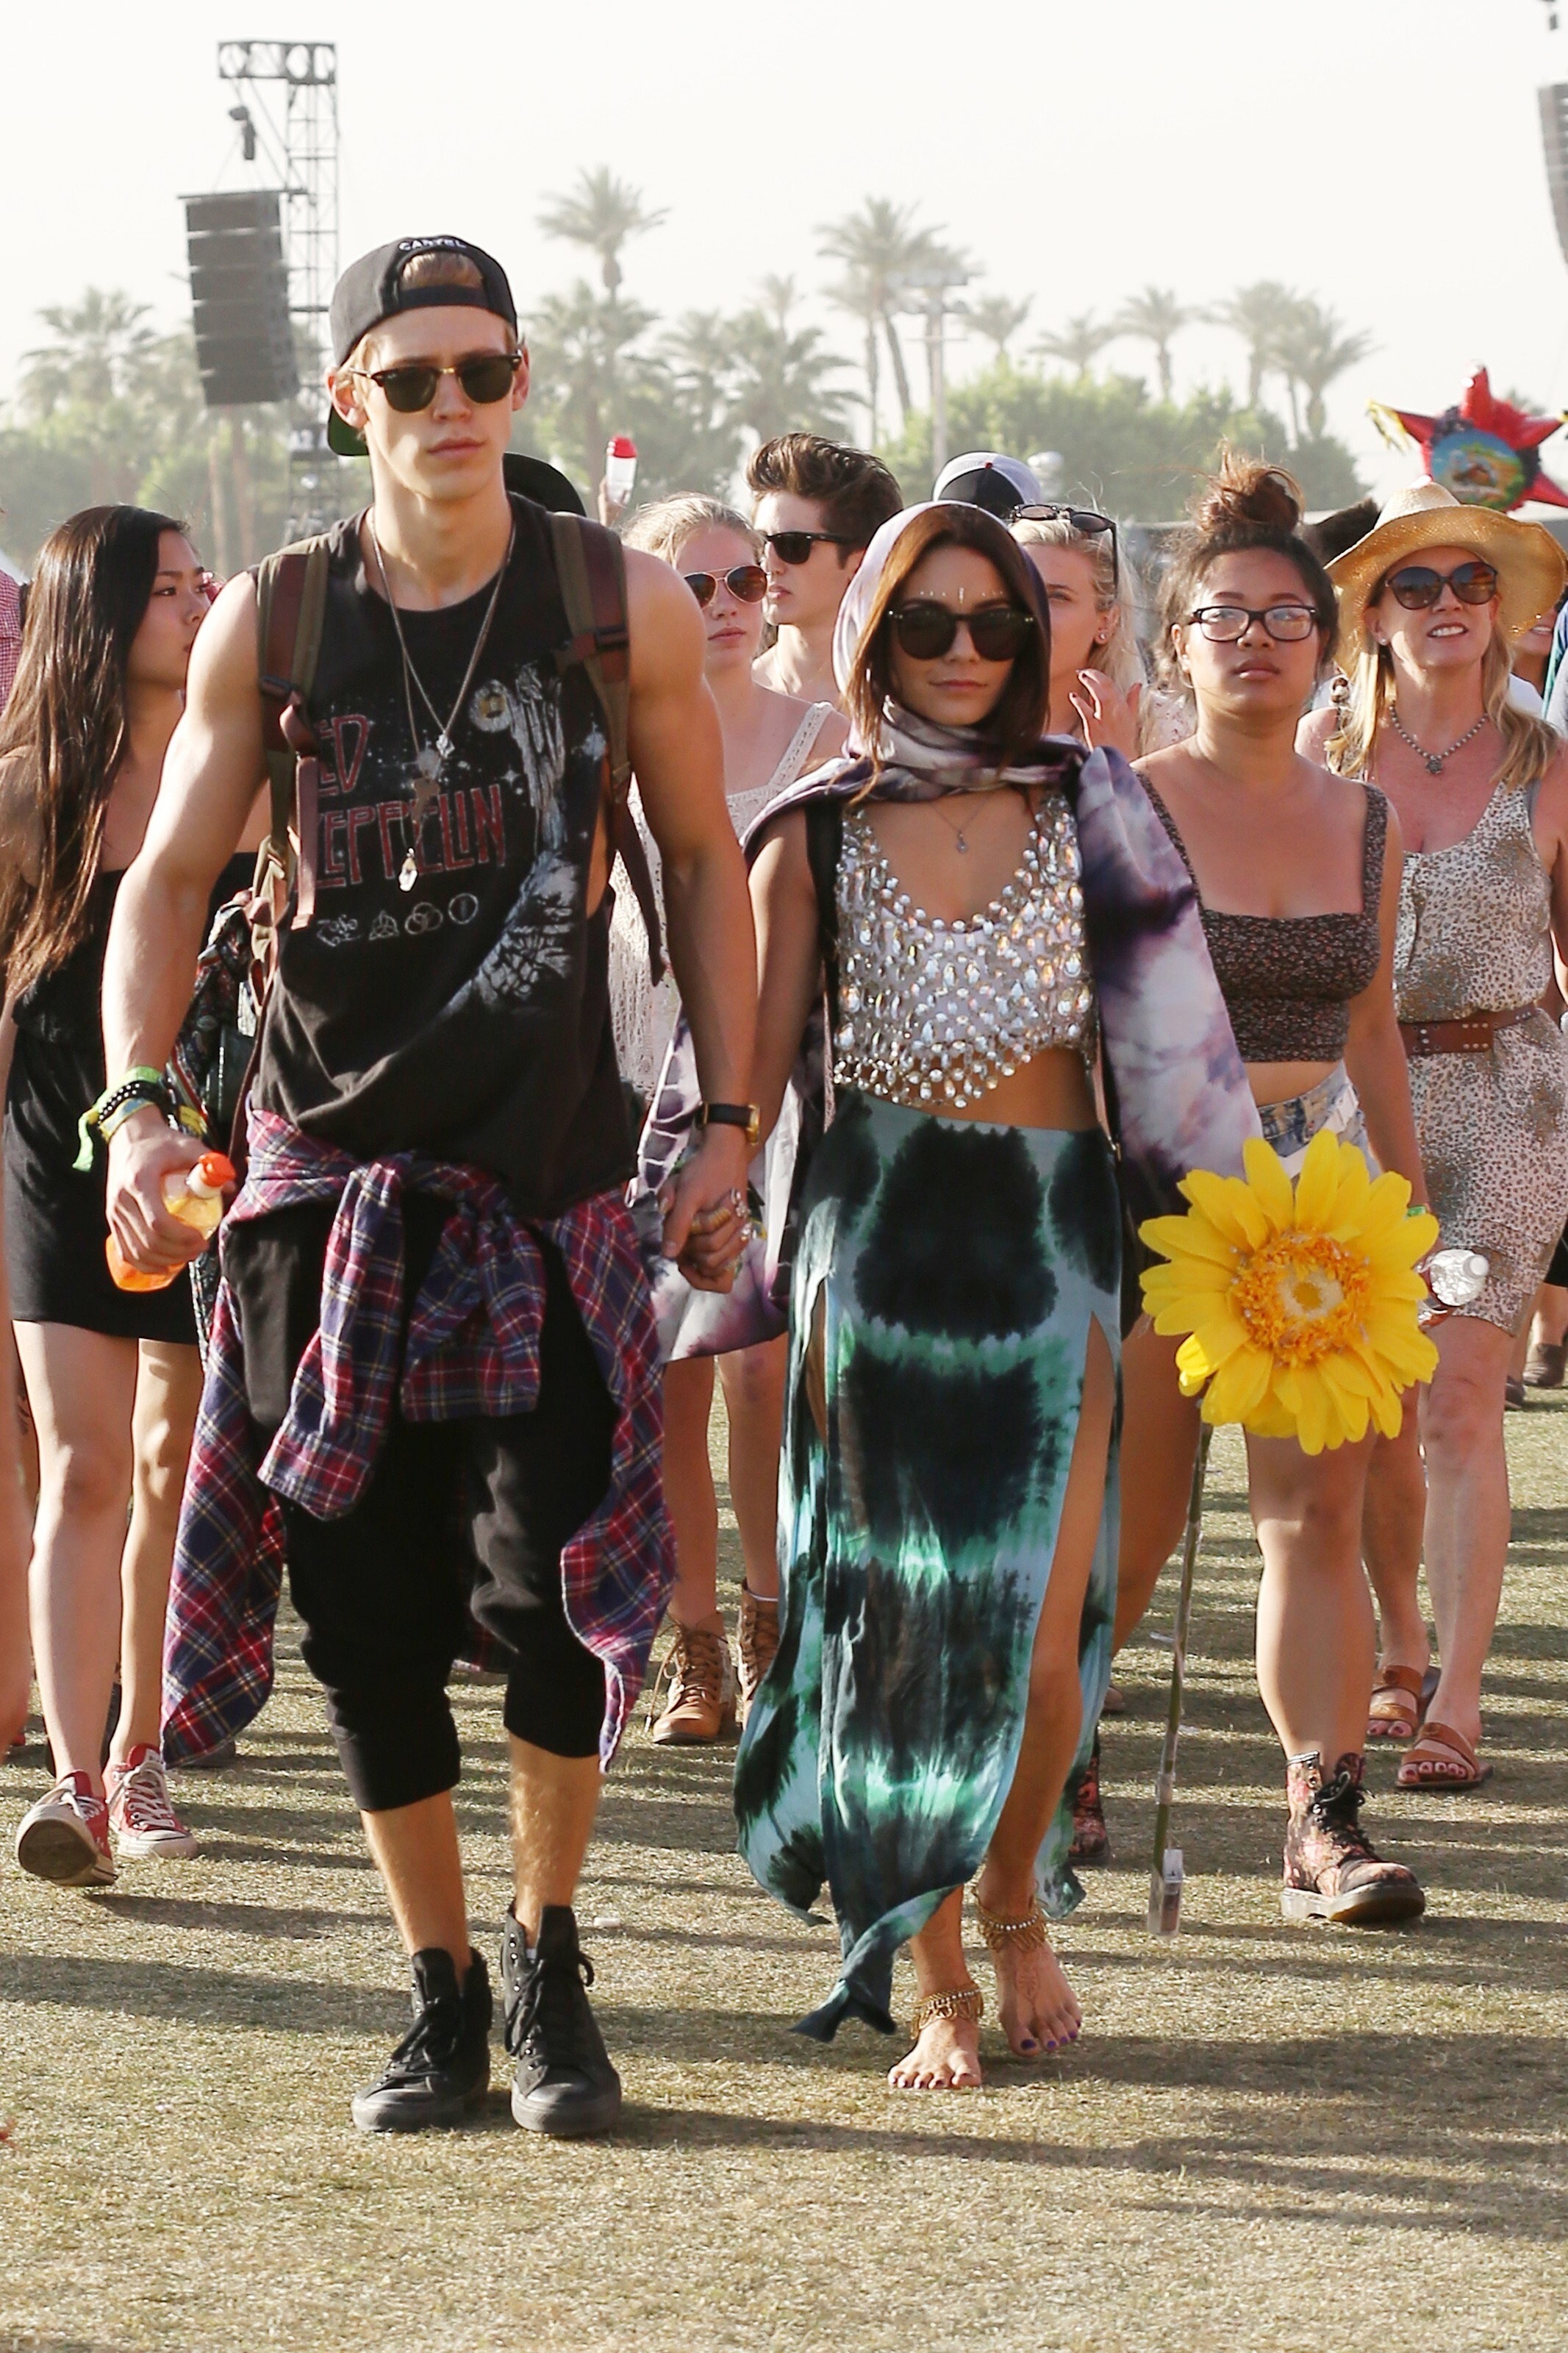 Austin Butler and Vanessa Hudgens holding hands at an outdoor festival